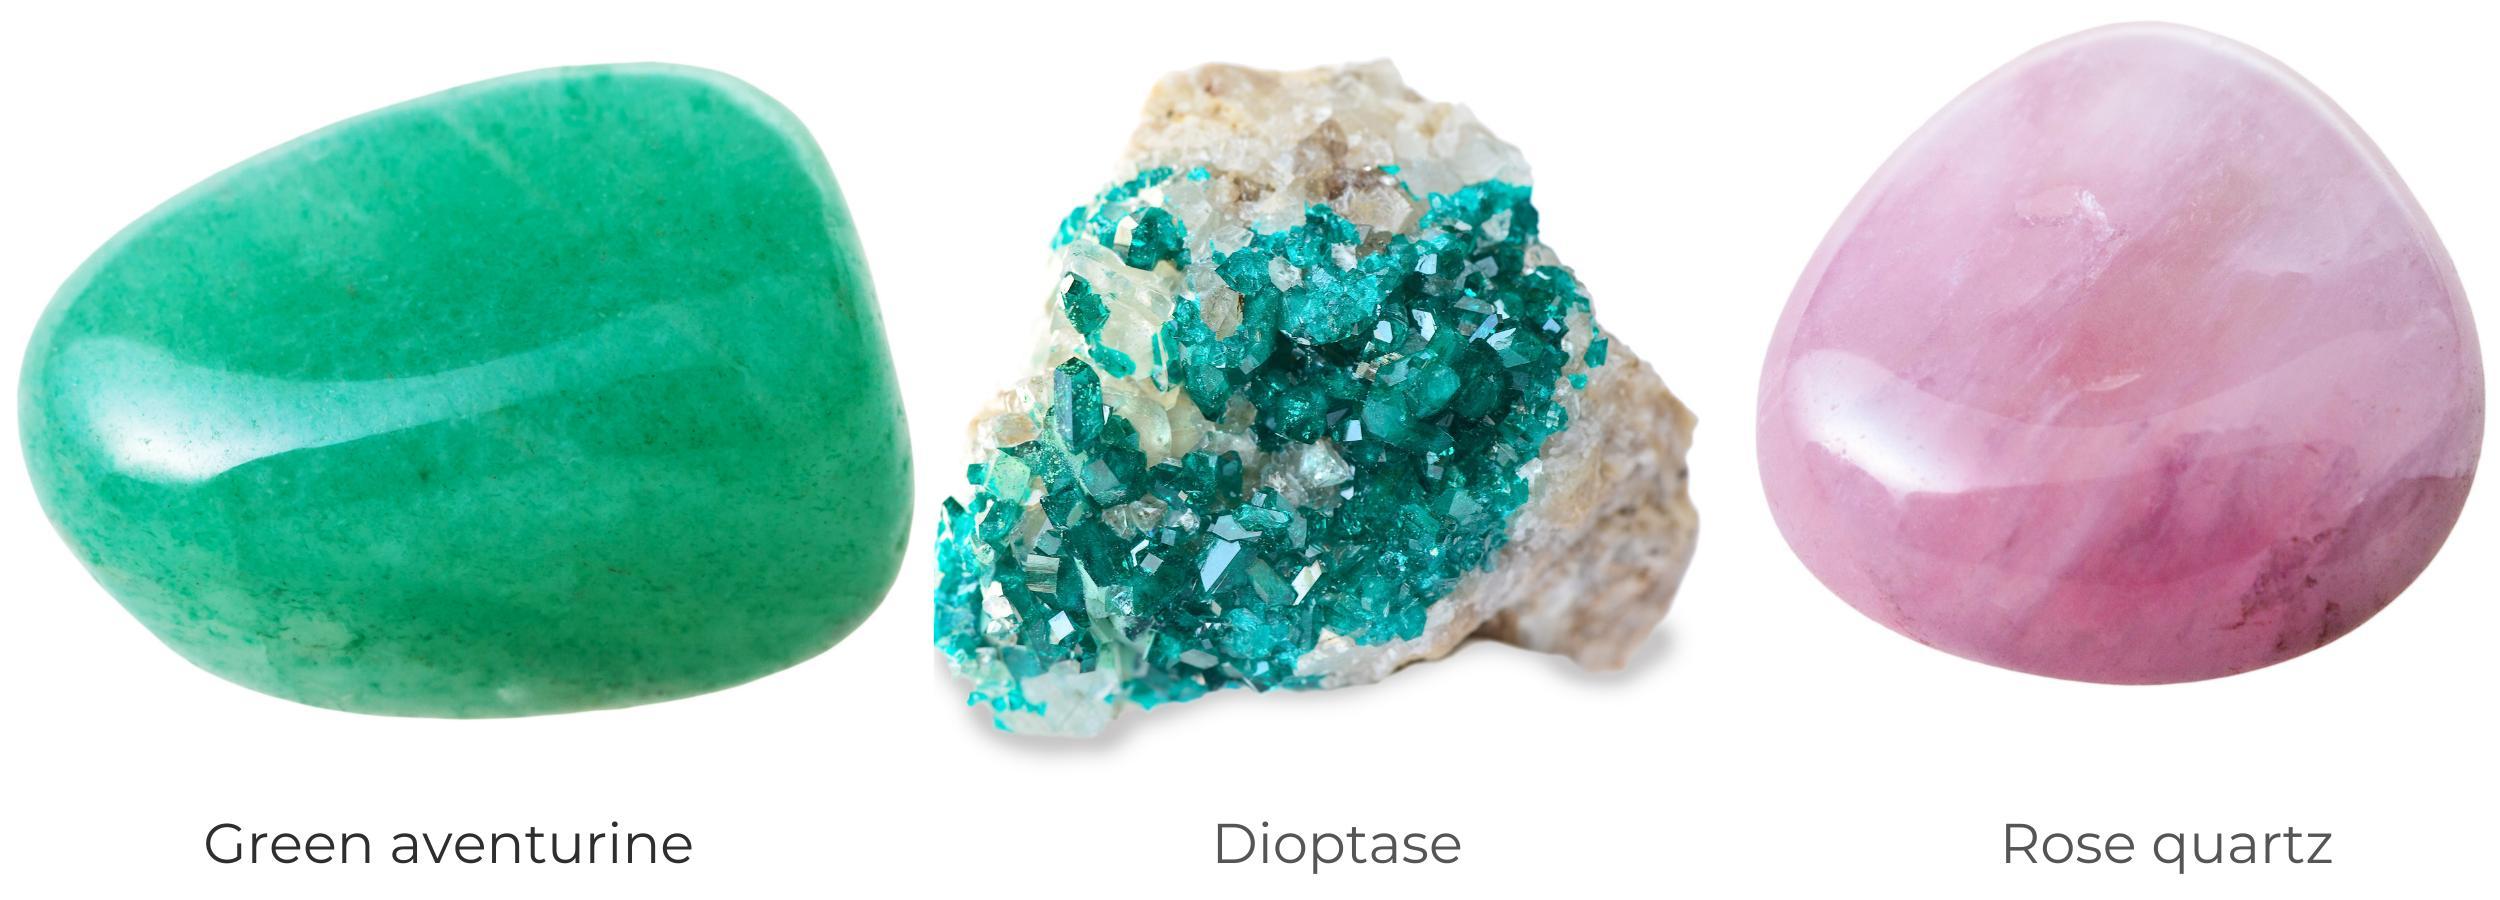 green aventurine, dioptase and rose quartz healing crystals